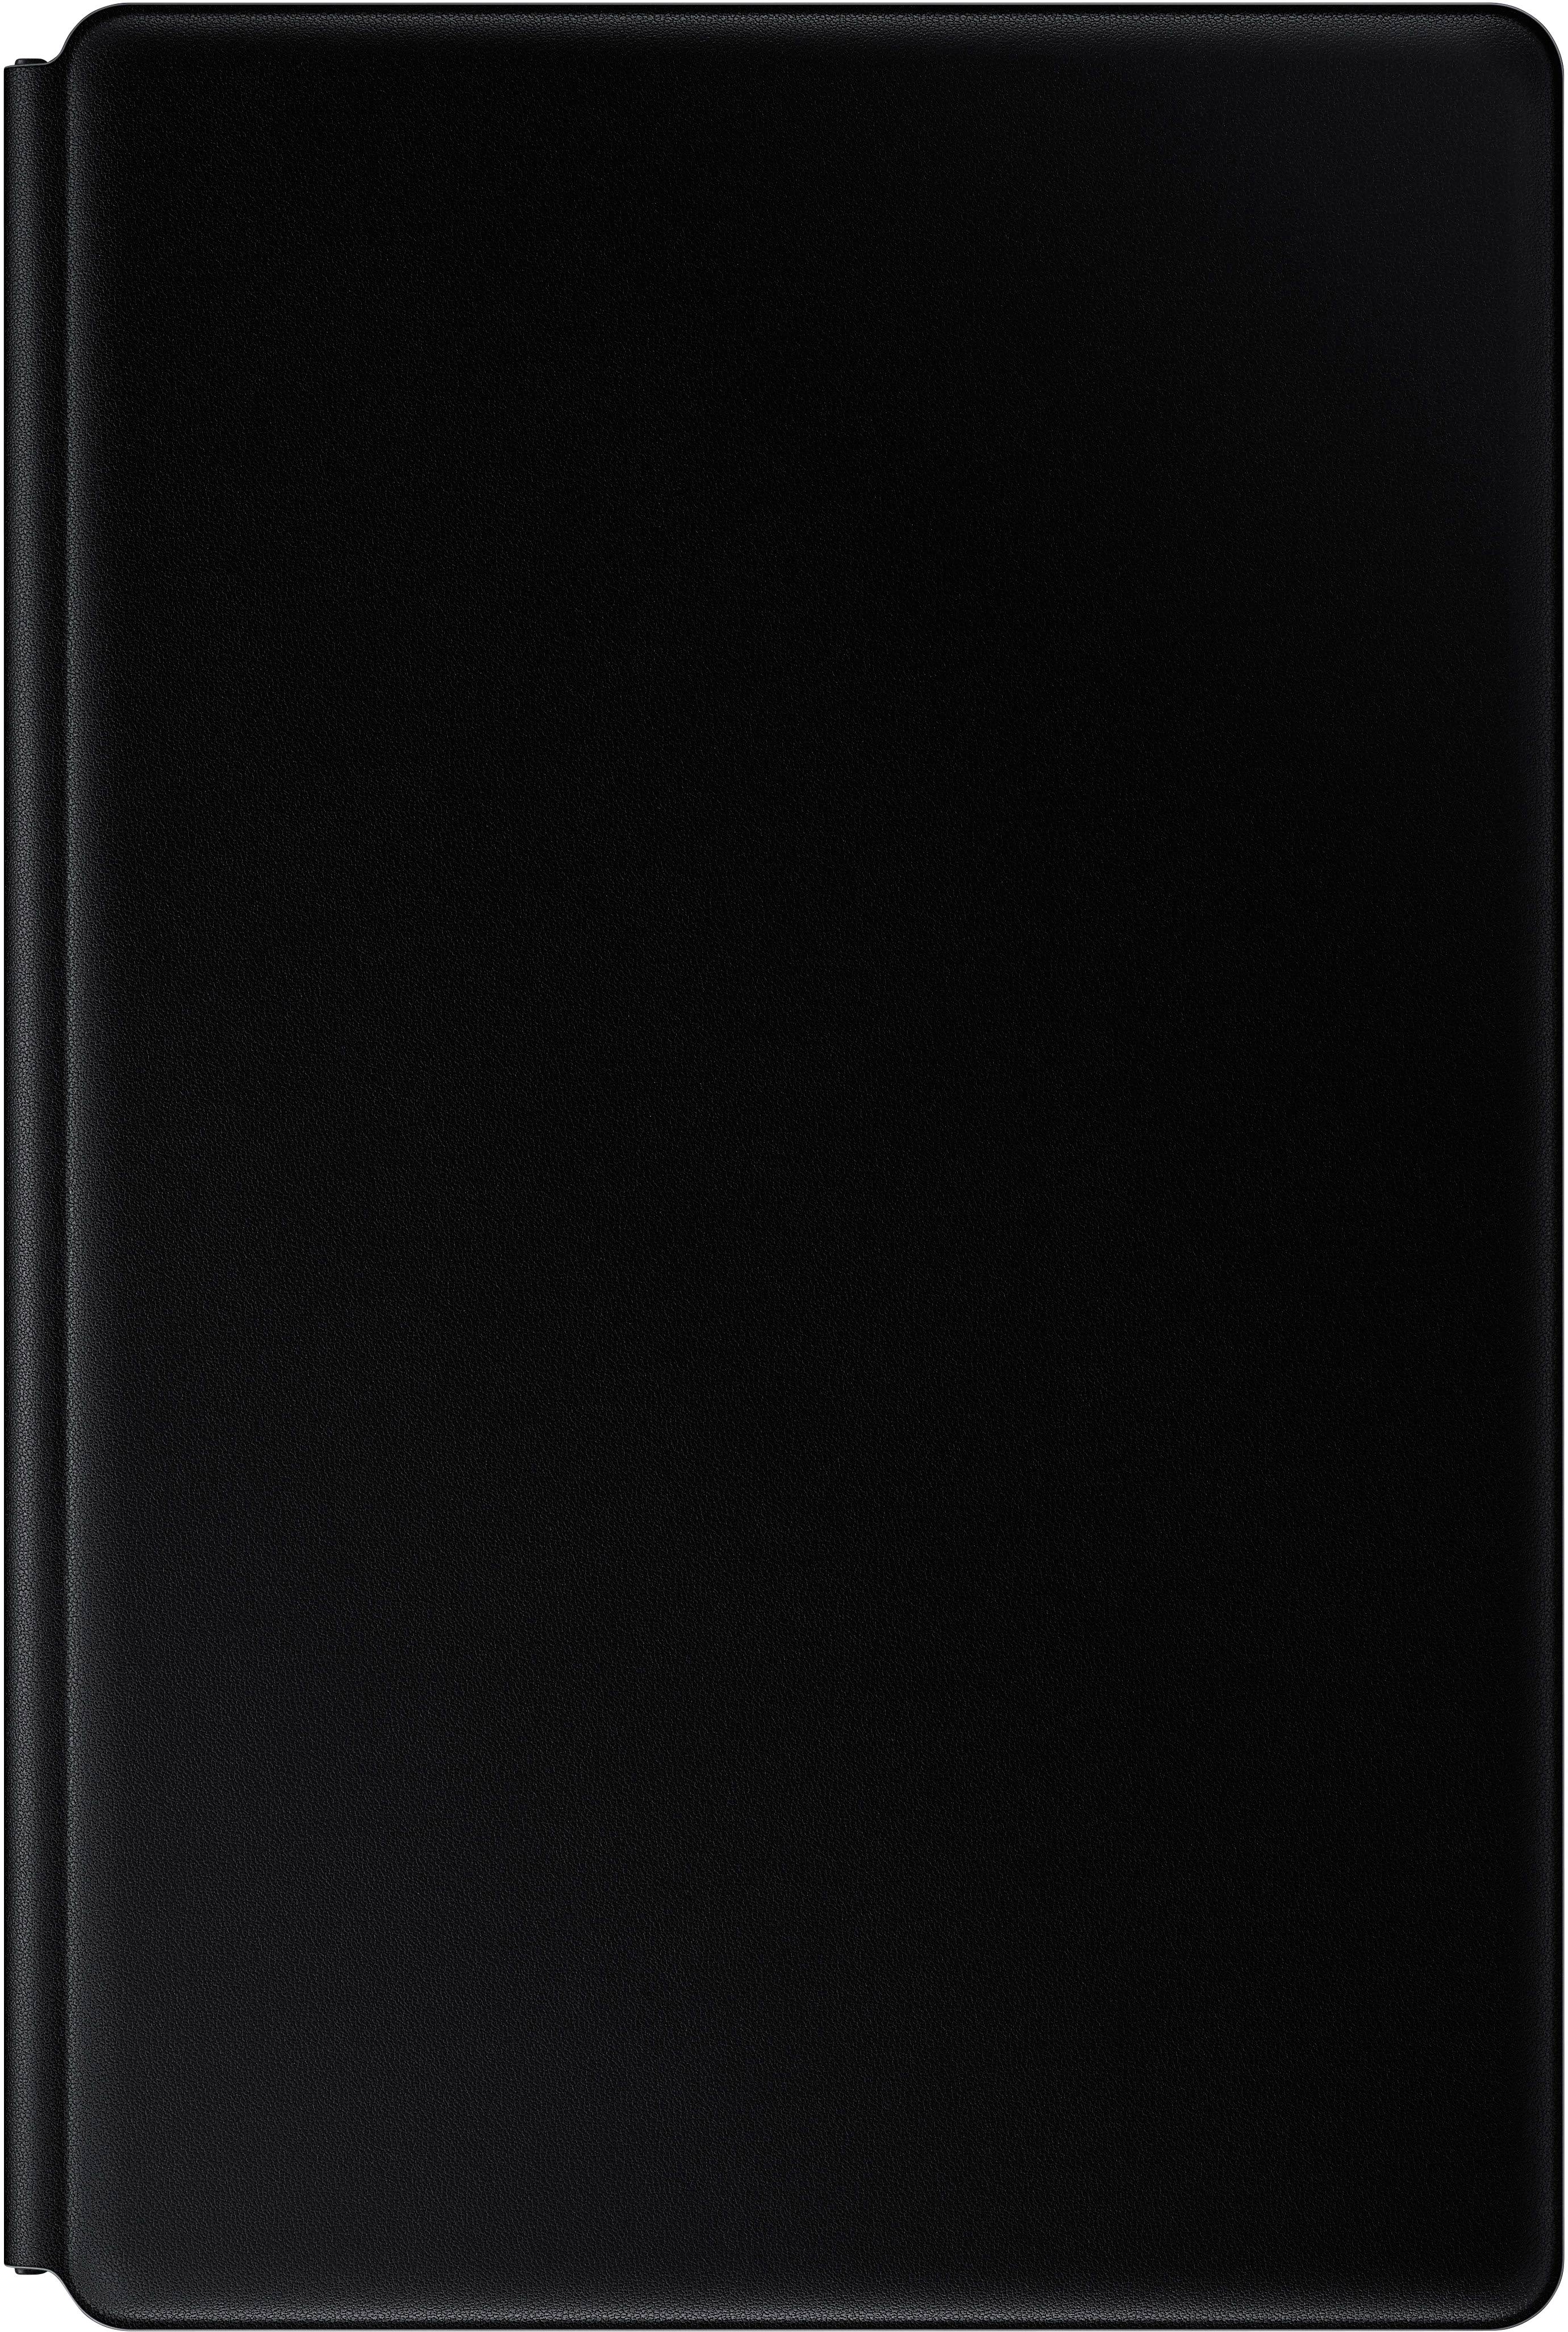 SAMSUNG Keyboard Cover Tab S7+ black